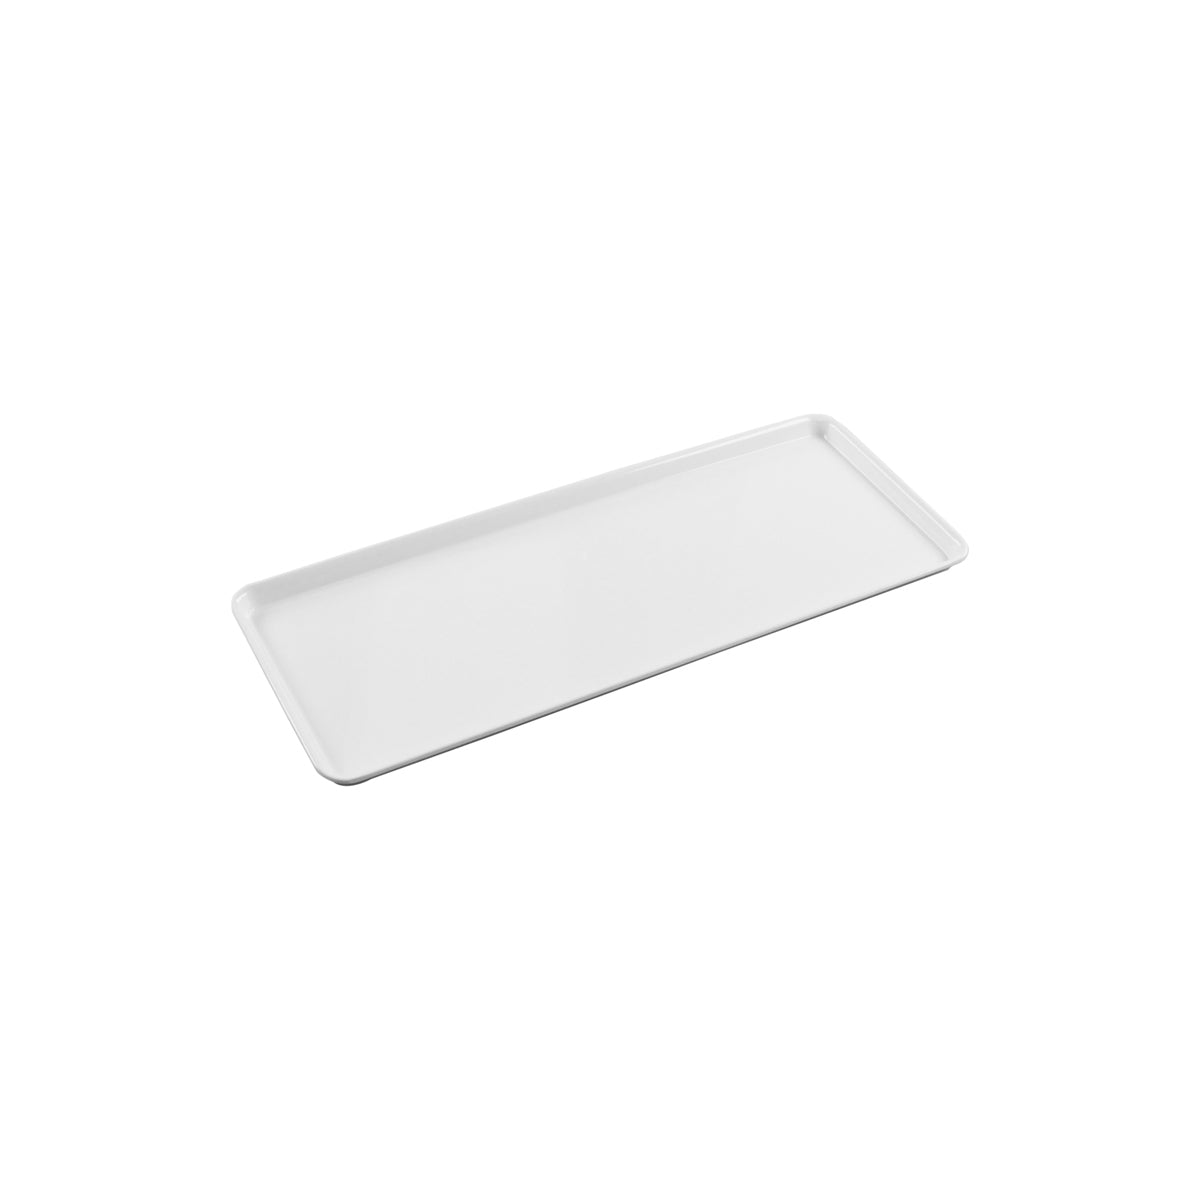 49025 Superware White Rectangular Platter 385x150mm Tomkin Australia Hospitality Supplies